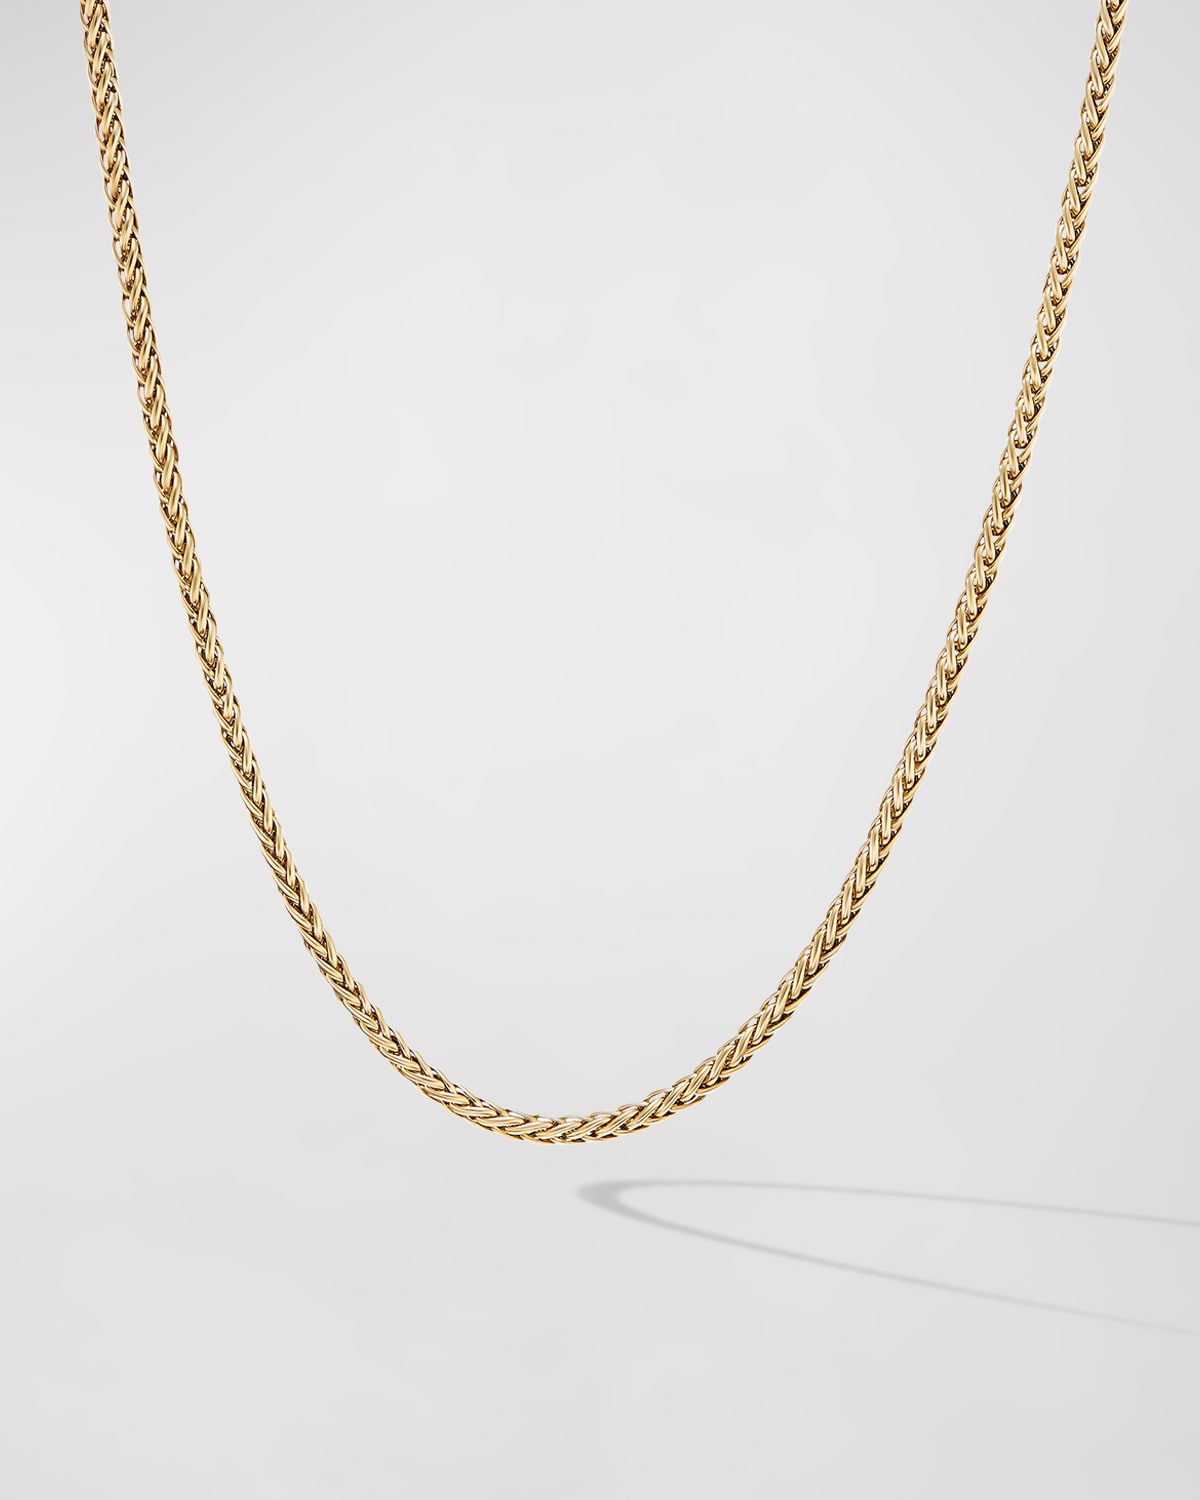 David Yurman Men's Wheat Chain Necklace in 18K Gold, 2.5mm, 22"L